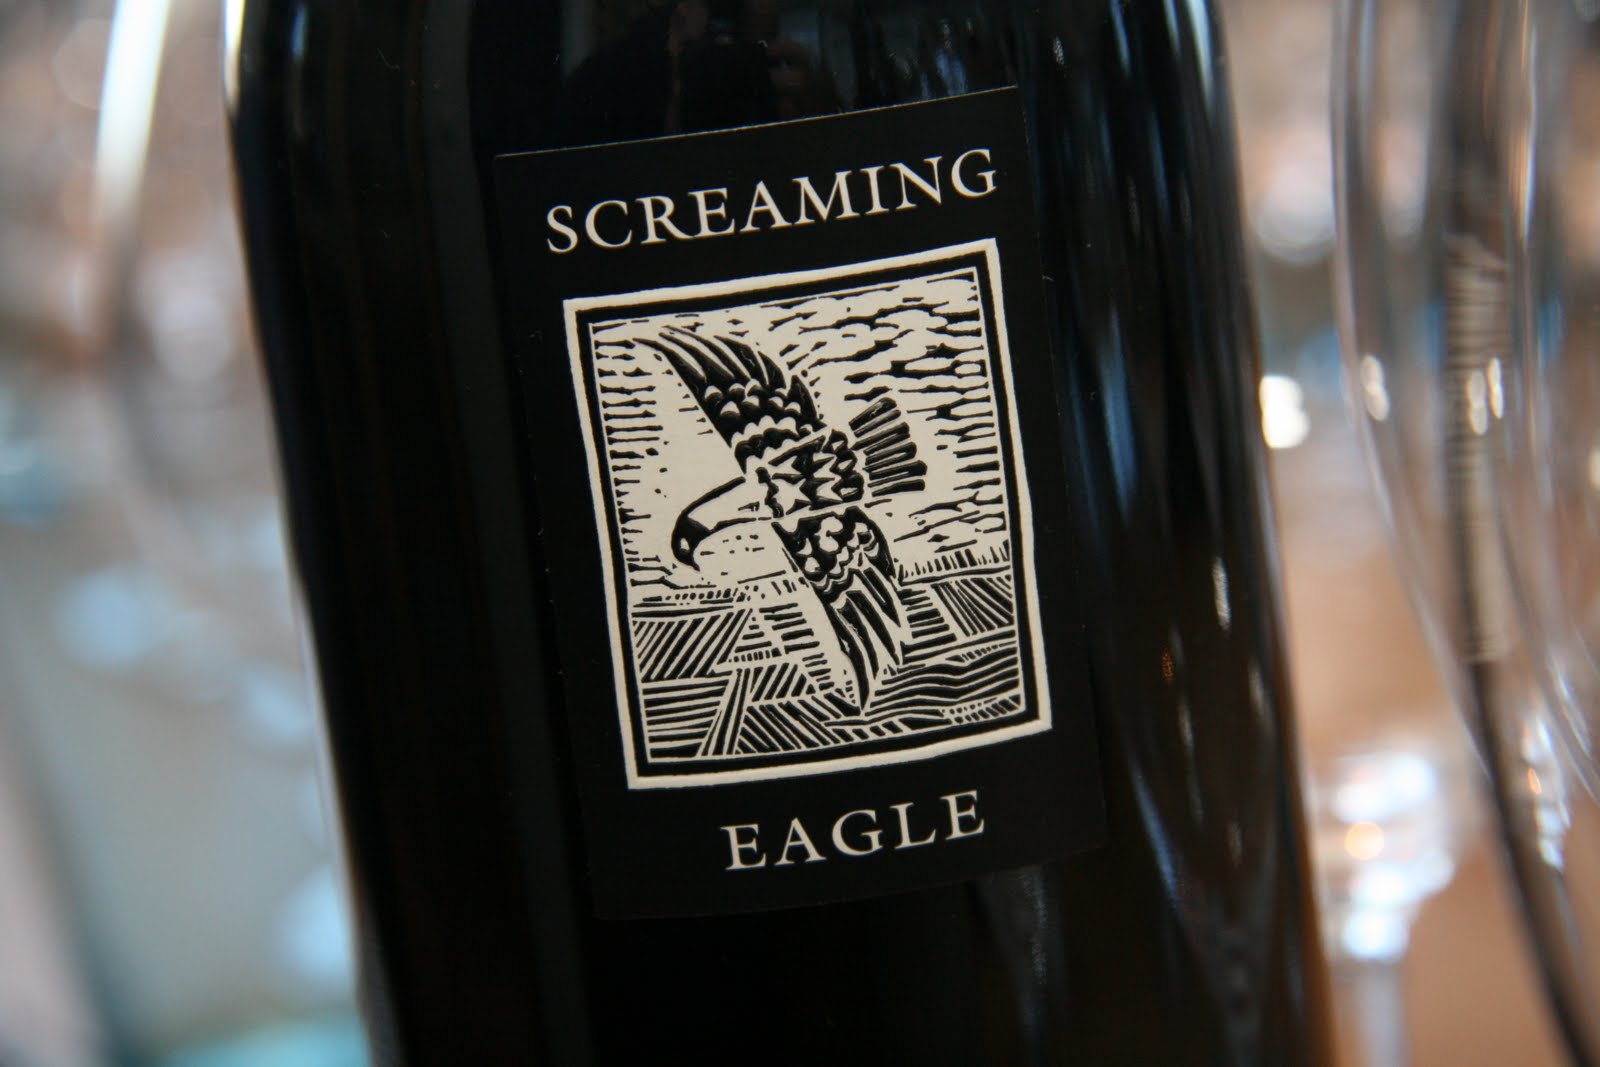 California Wine Report: 2004 Screaming Eagle